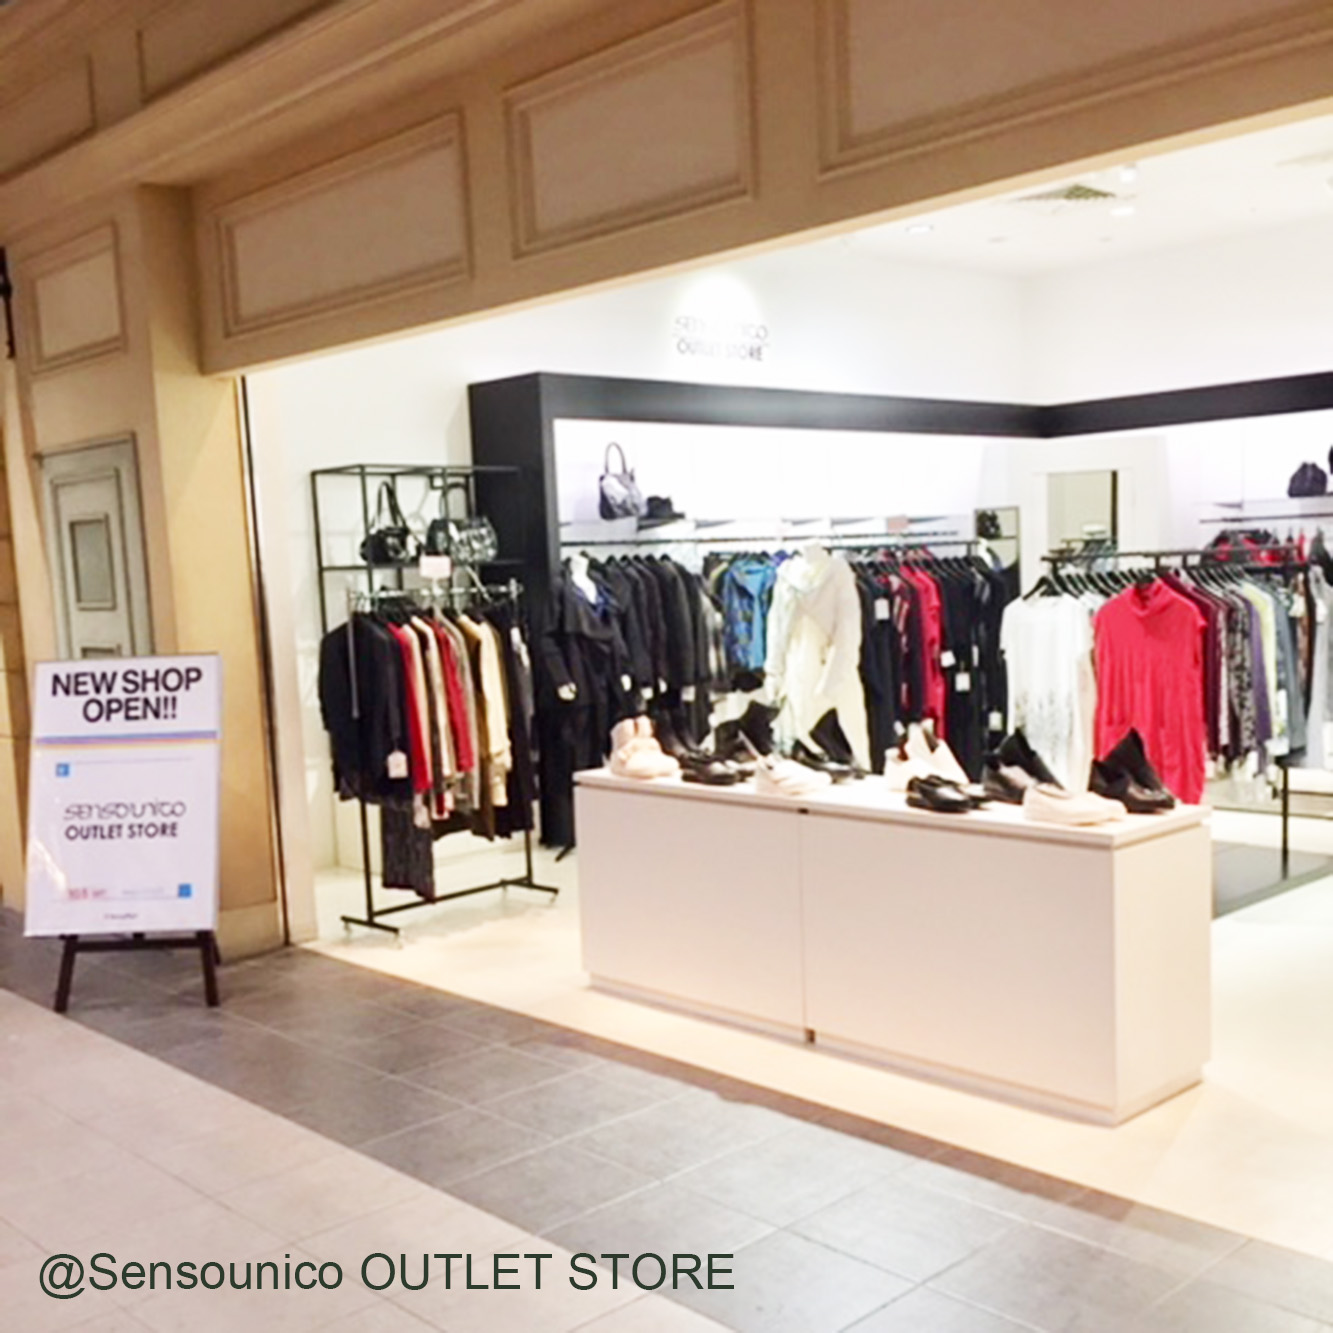 Shop News Sensounico Outlet Store ヴィーナスフォート台場店です 10 5 Sat New Open Sensounico